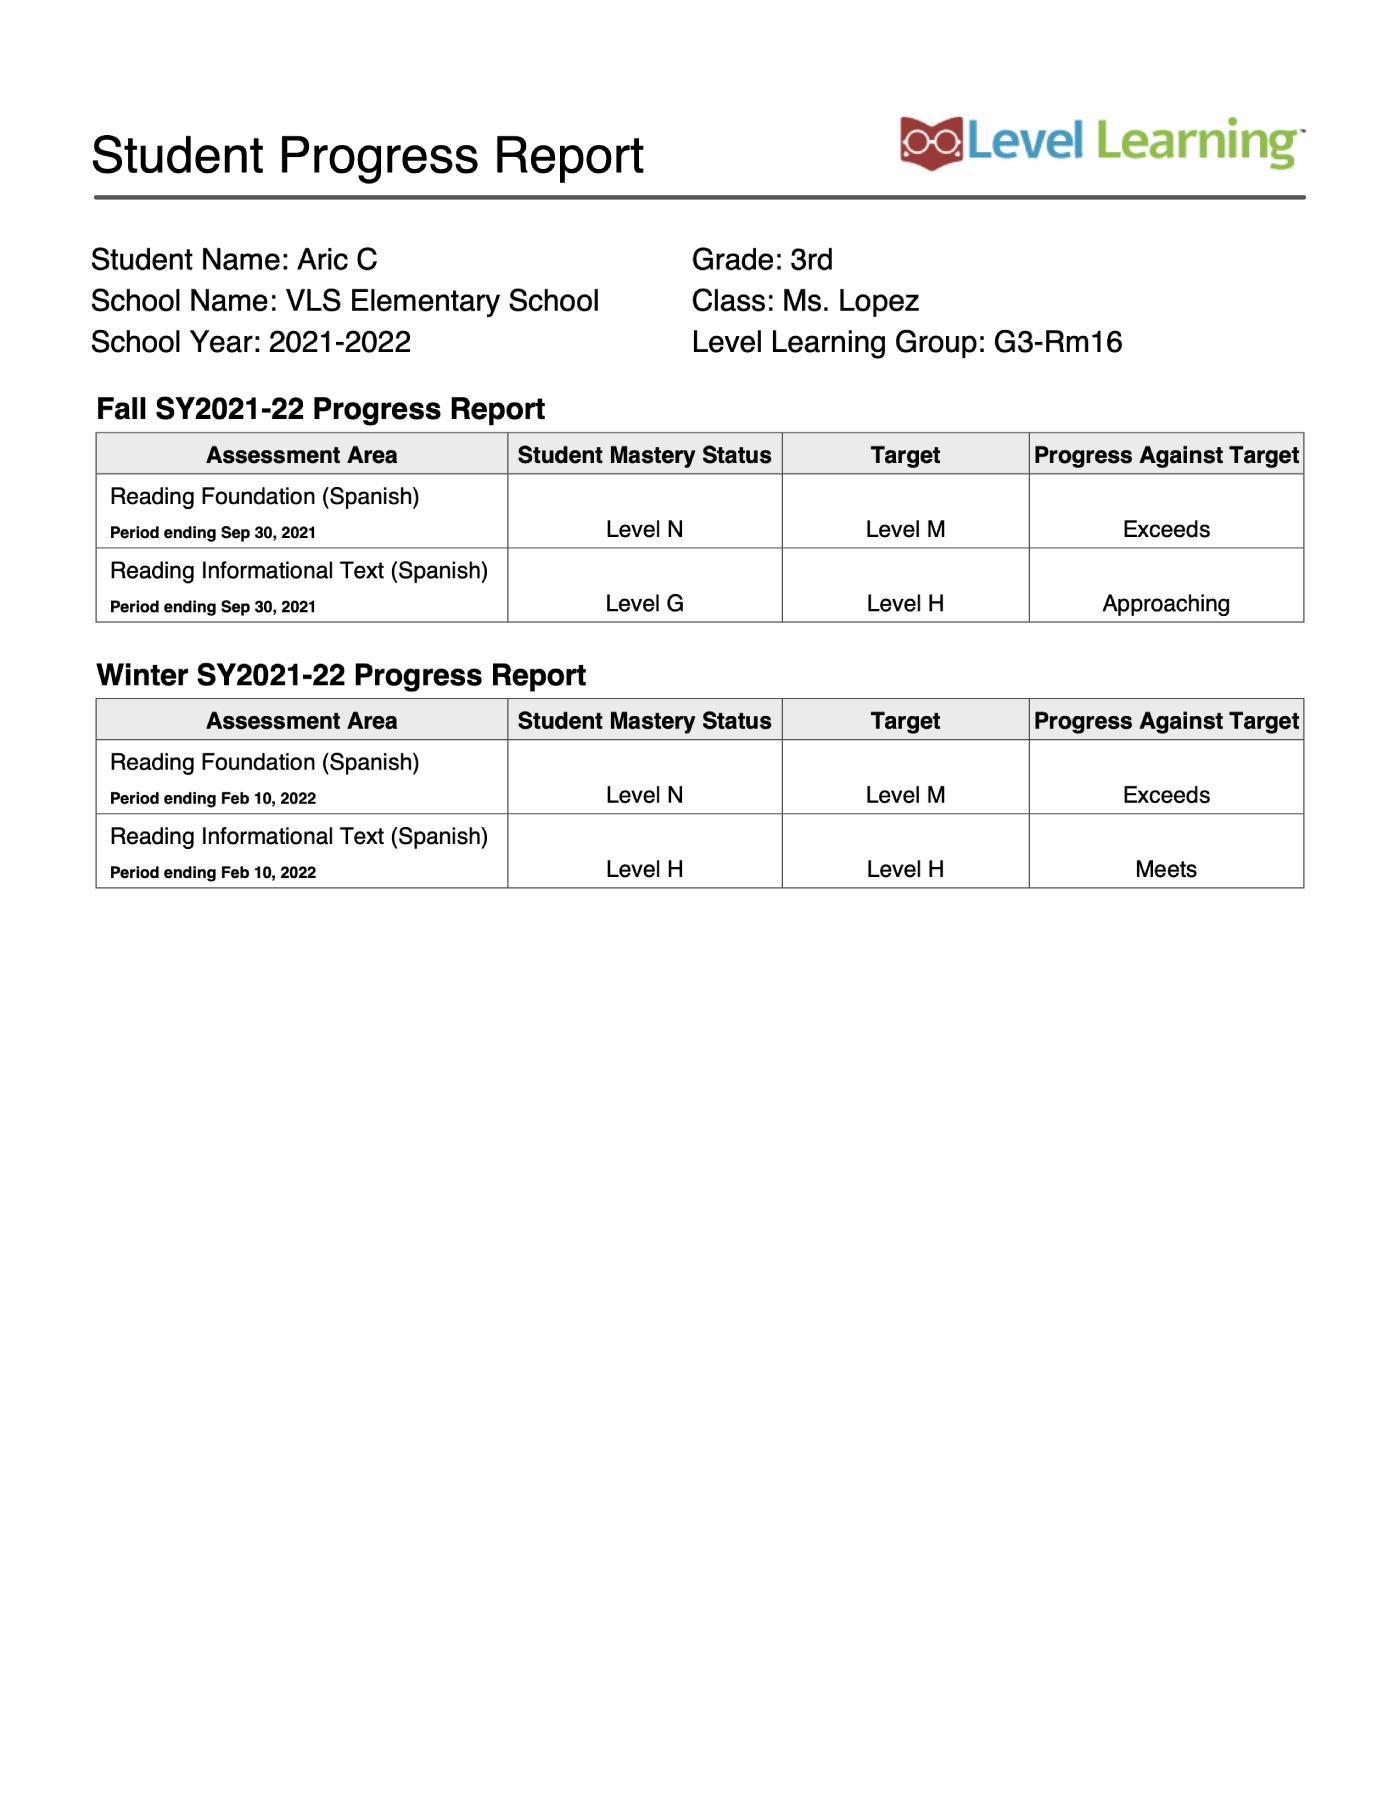 Student progress report